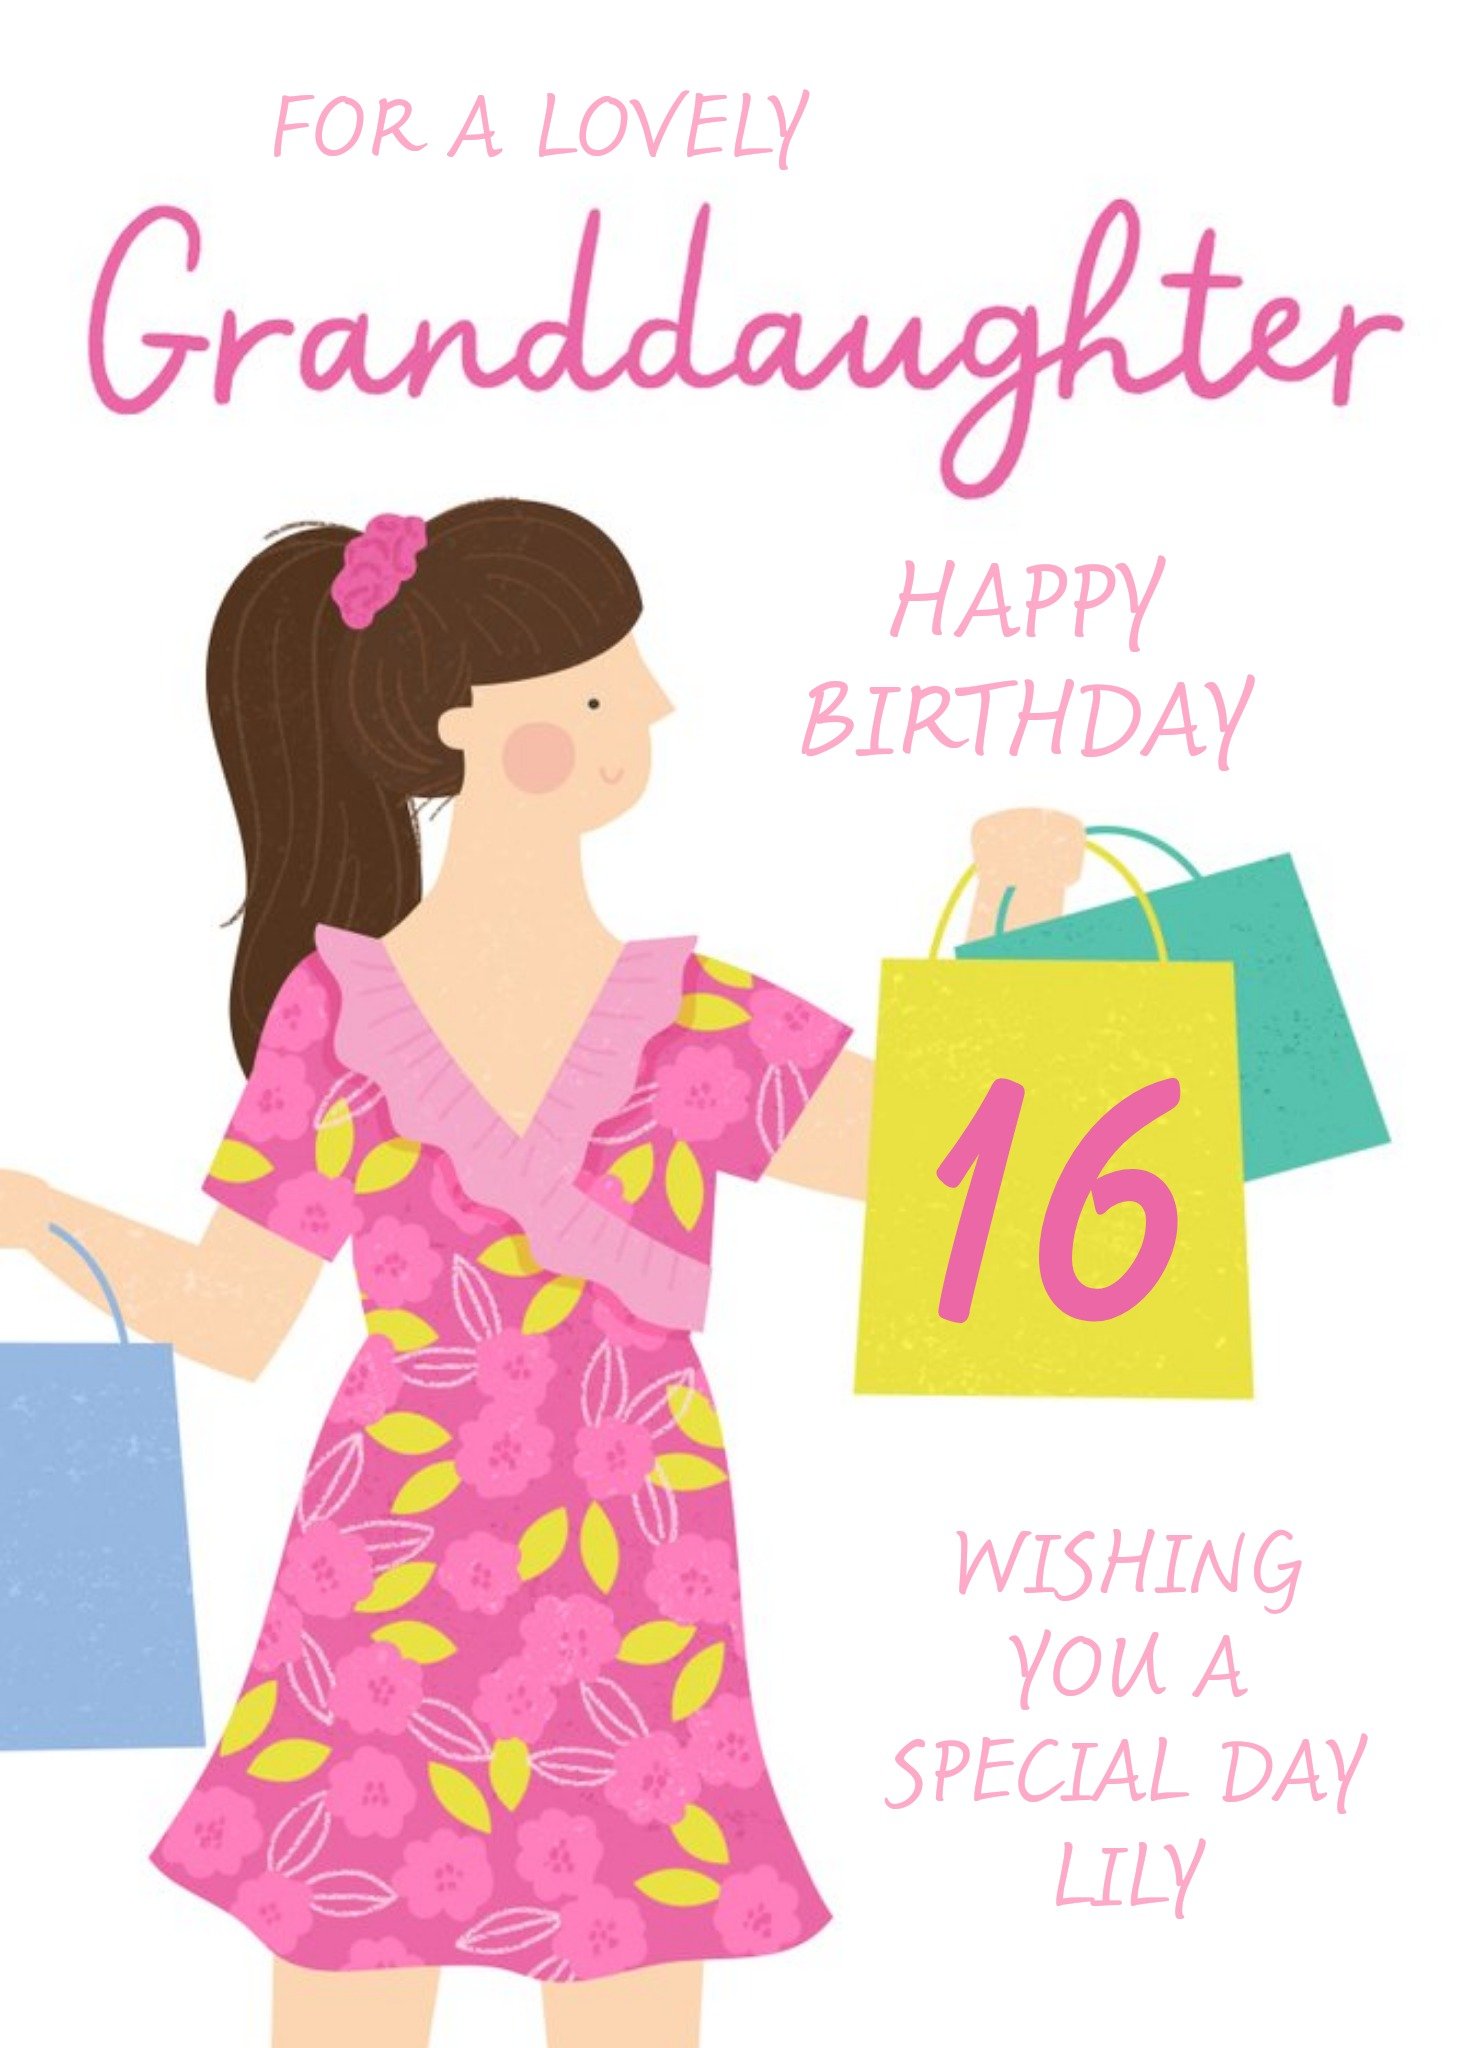 Moonpig Lovely Granddaughter Shopping Bags 16th Birthday Card Ecard